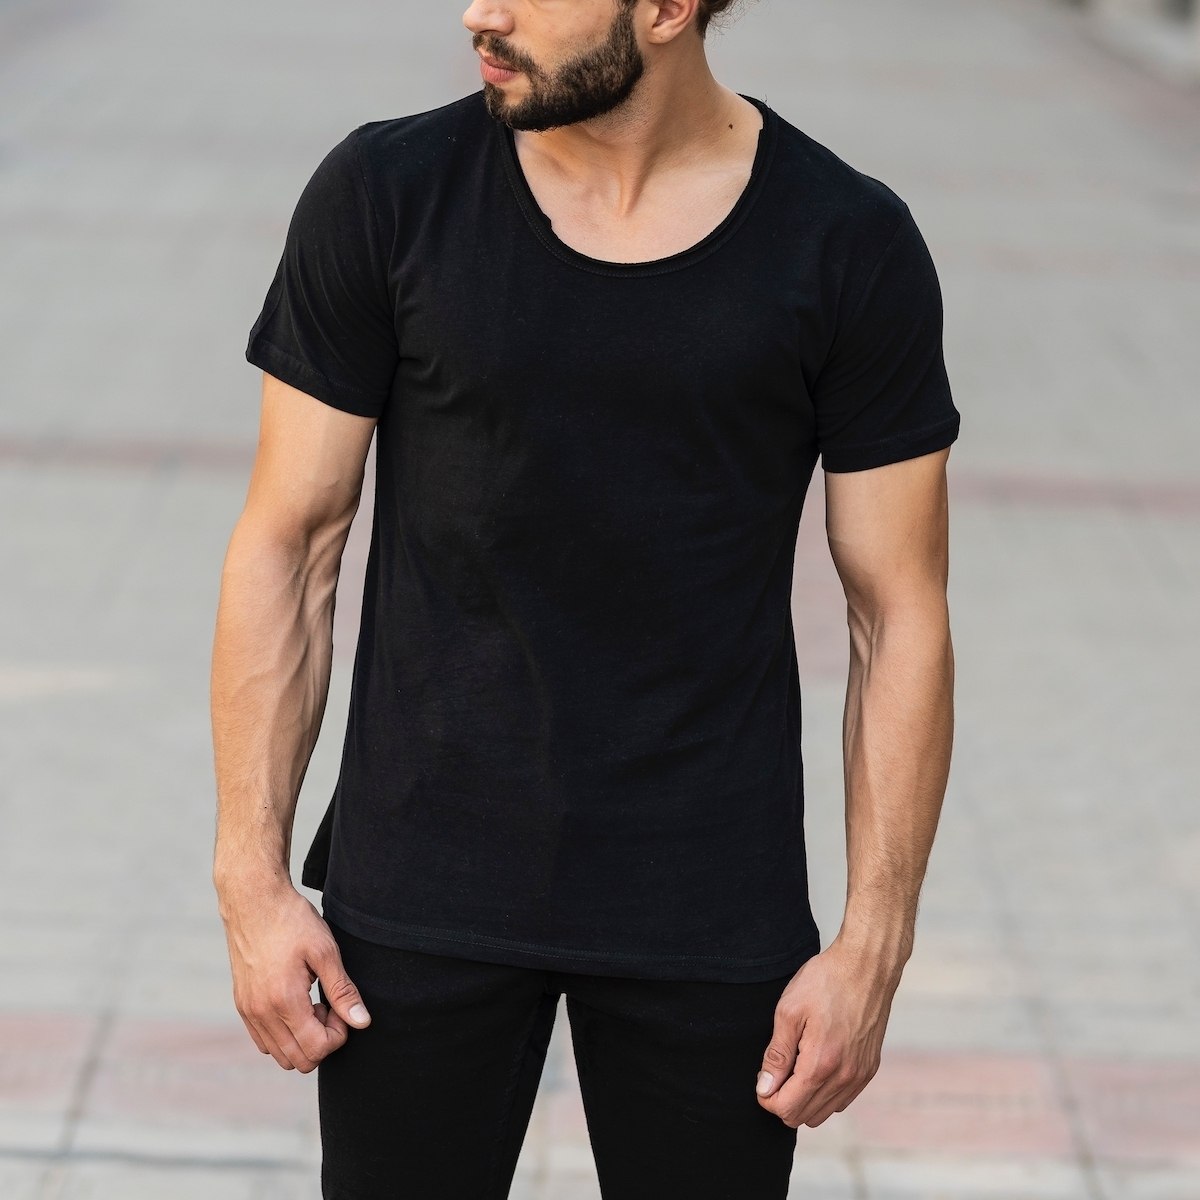 Croped Collar Black T-Shirt - 1